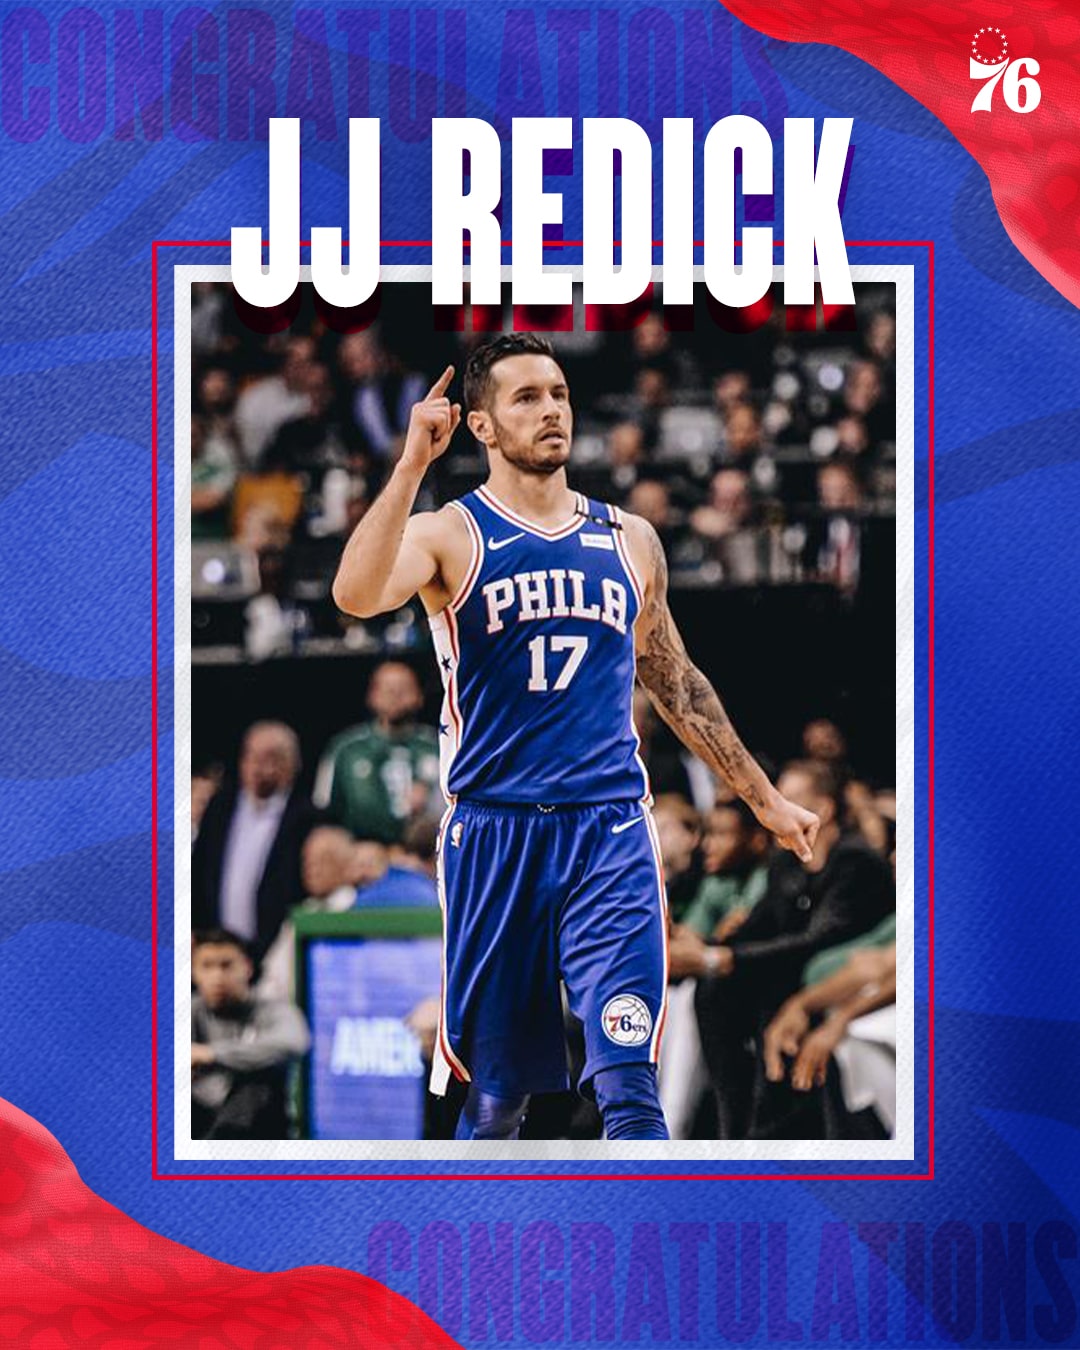 JJ Redick retires from NBA